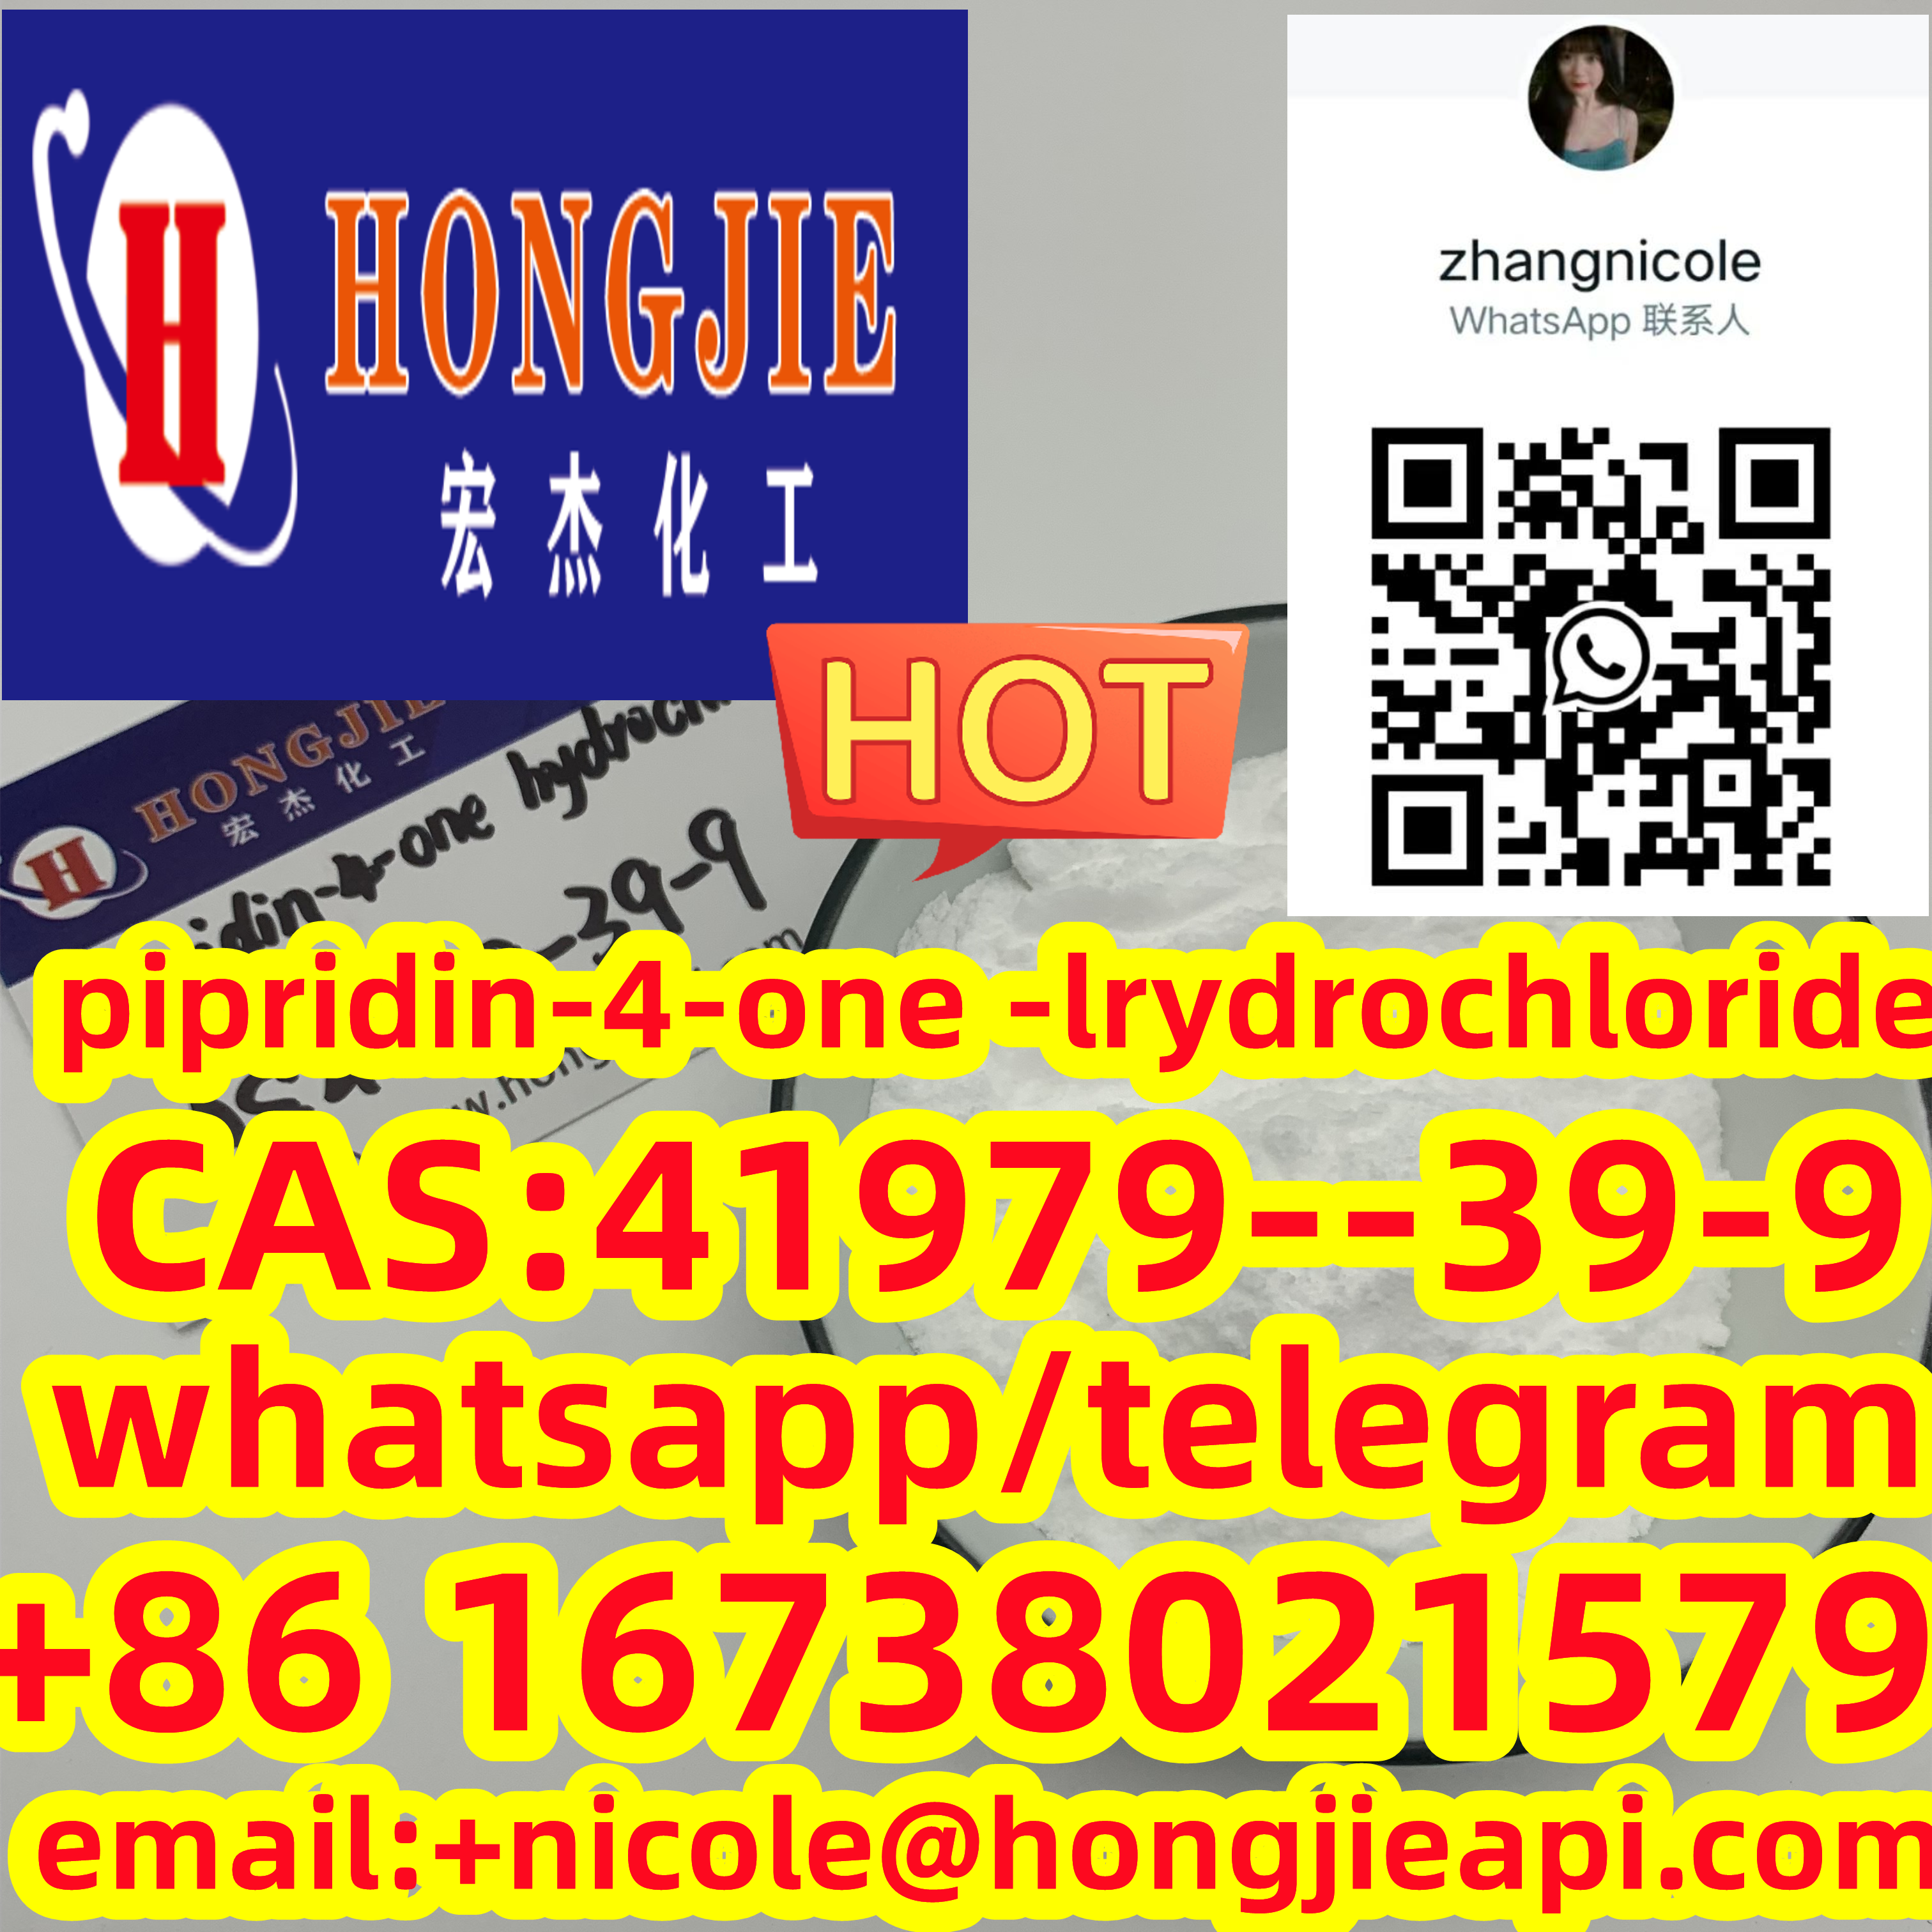 pipridin-4-one -lrydrochloride CAS:41979--39-9